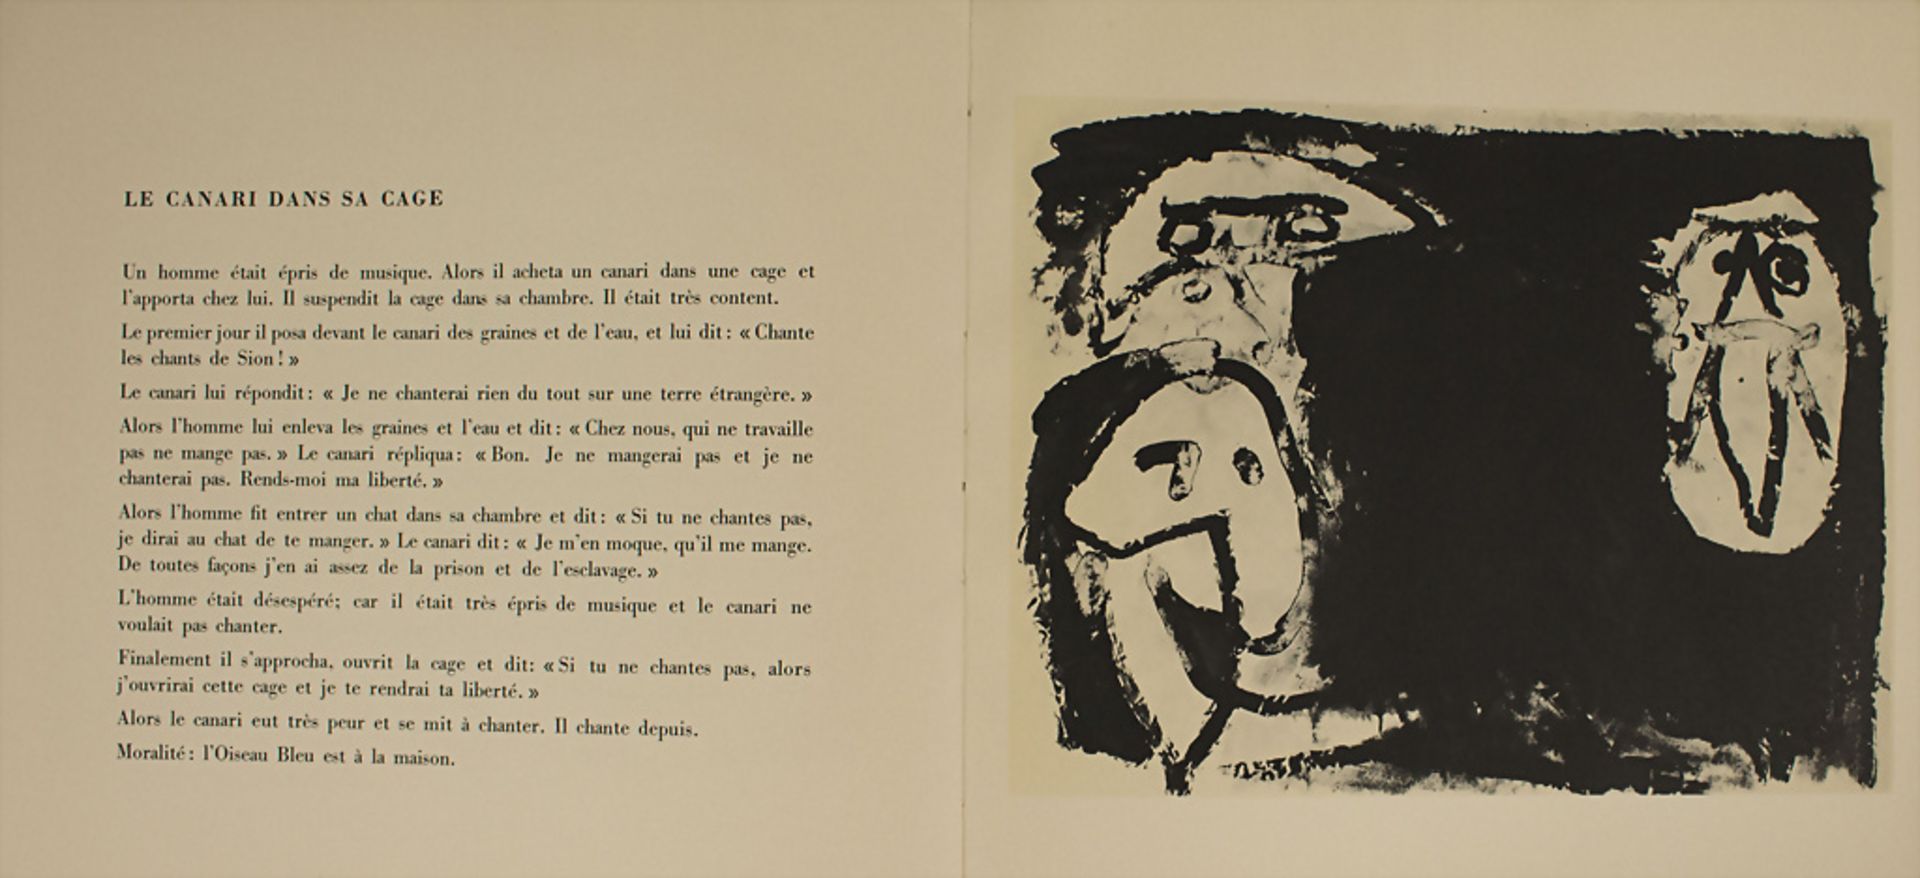 Pierre Alechinsky, Amos Kenan: Les Tireurs de Langue, Turin, 1974 - Image 4 of 6